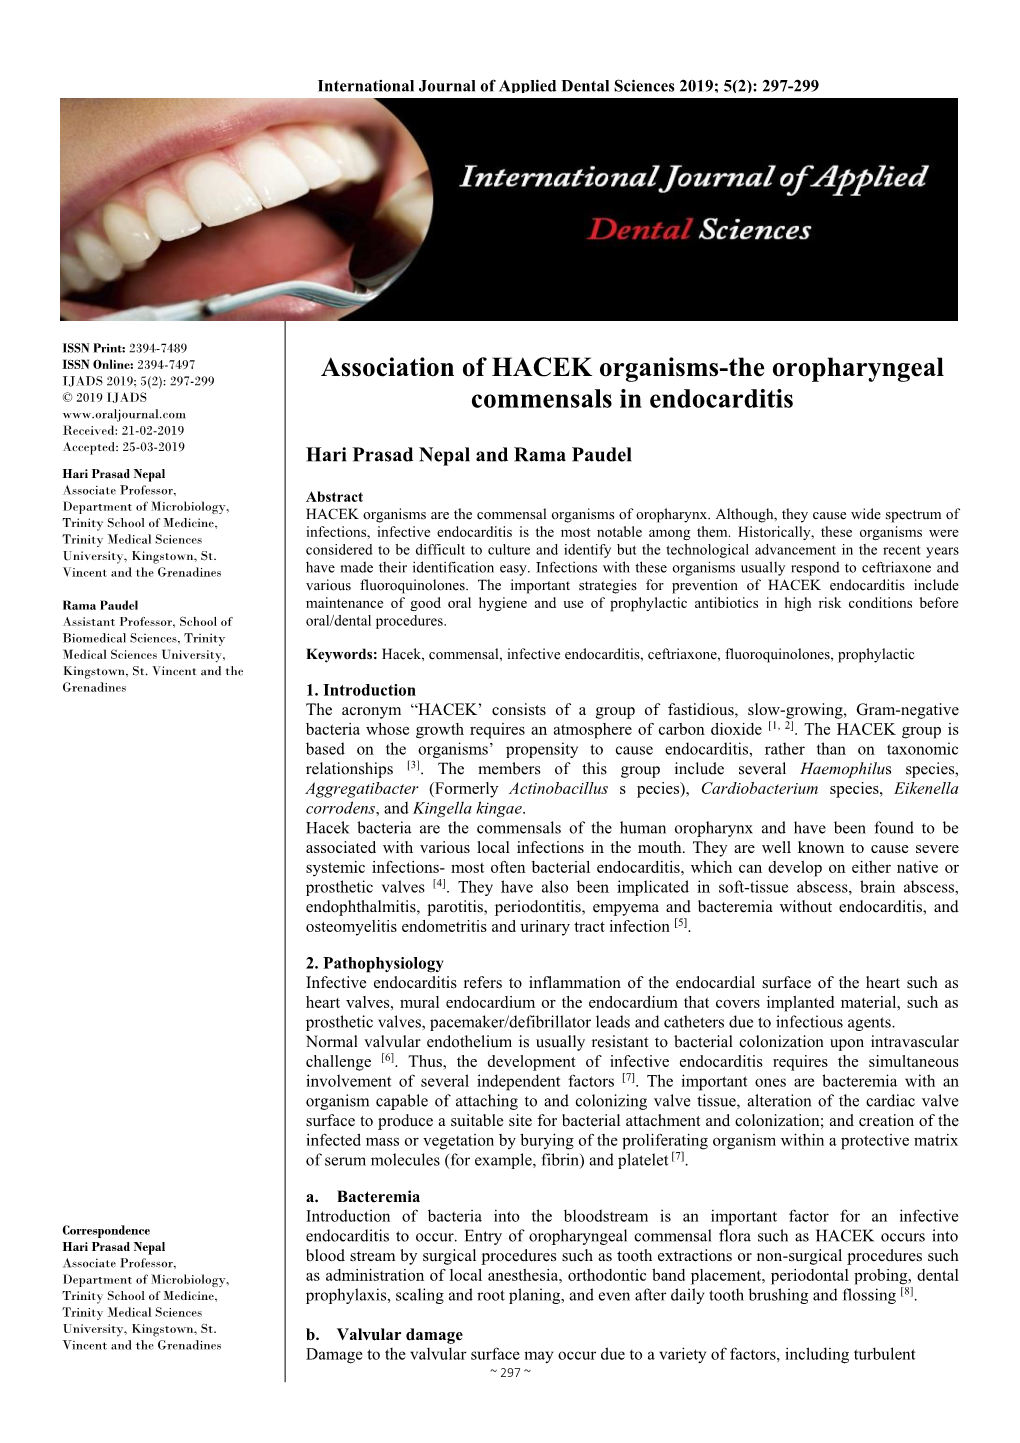 Association of HACEK Organisms-The Oropharyngeal Commensals In